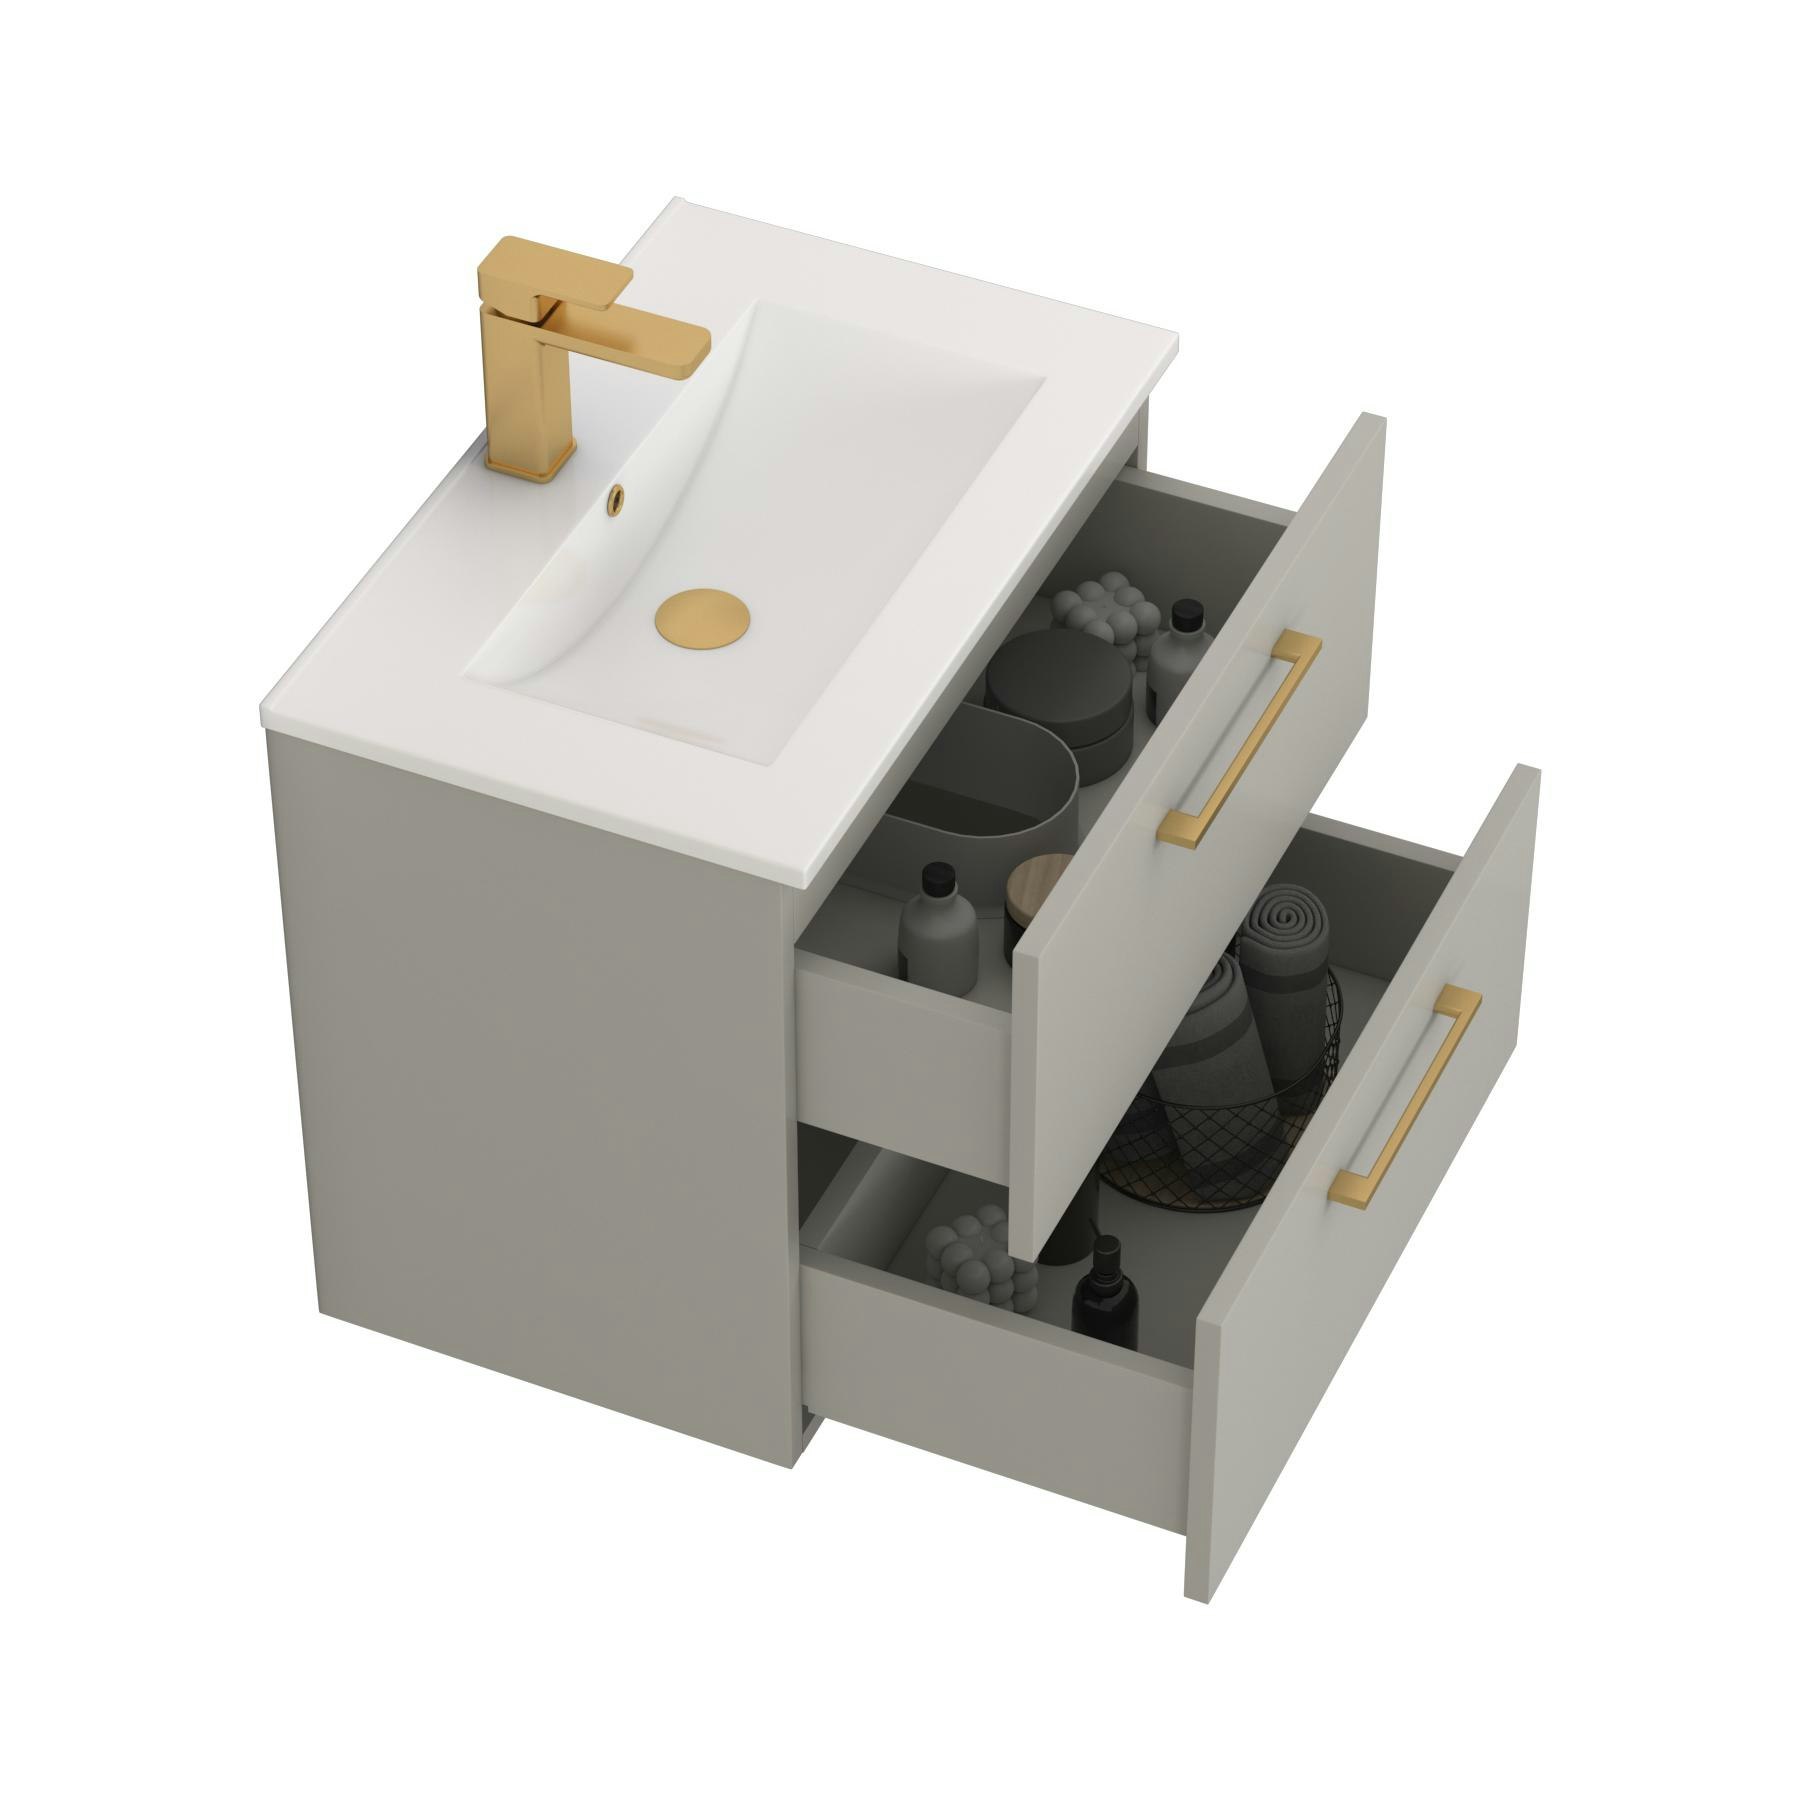 Modena 600mm Satin Grey Wall Hung Vanity Unit 2 Drawer Minimalist Basin With Brushed Brass Handle